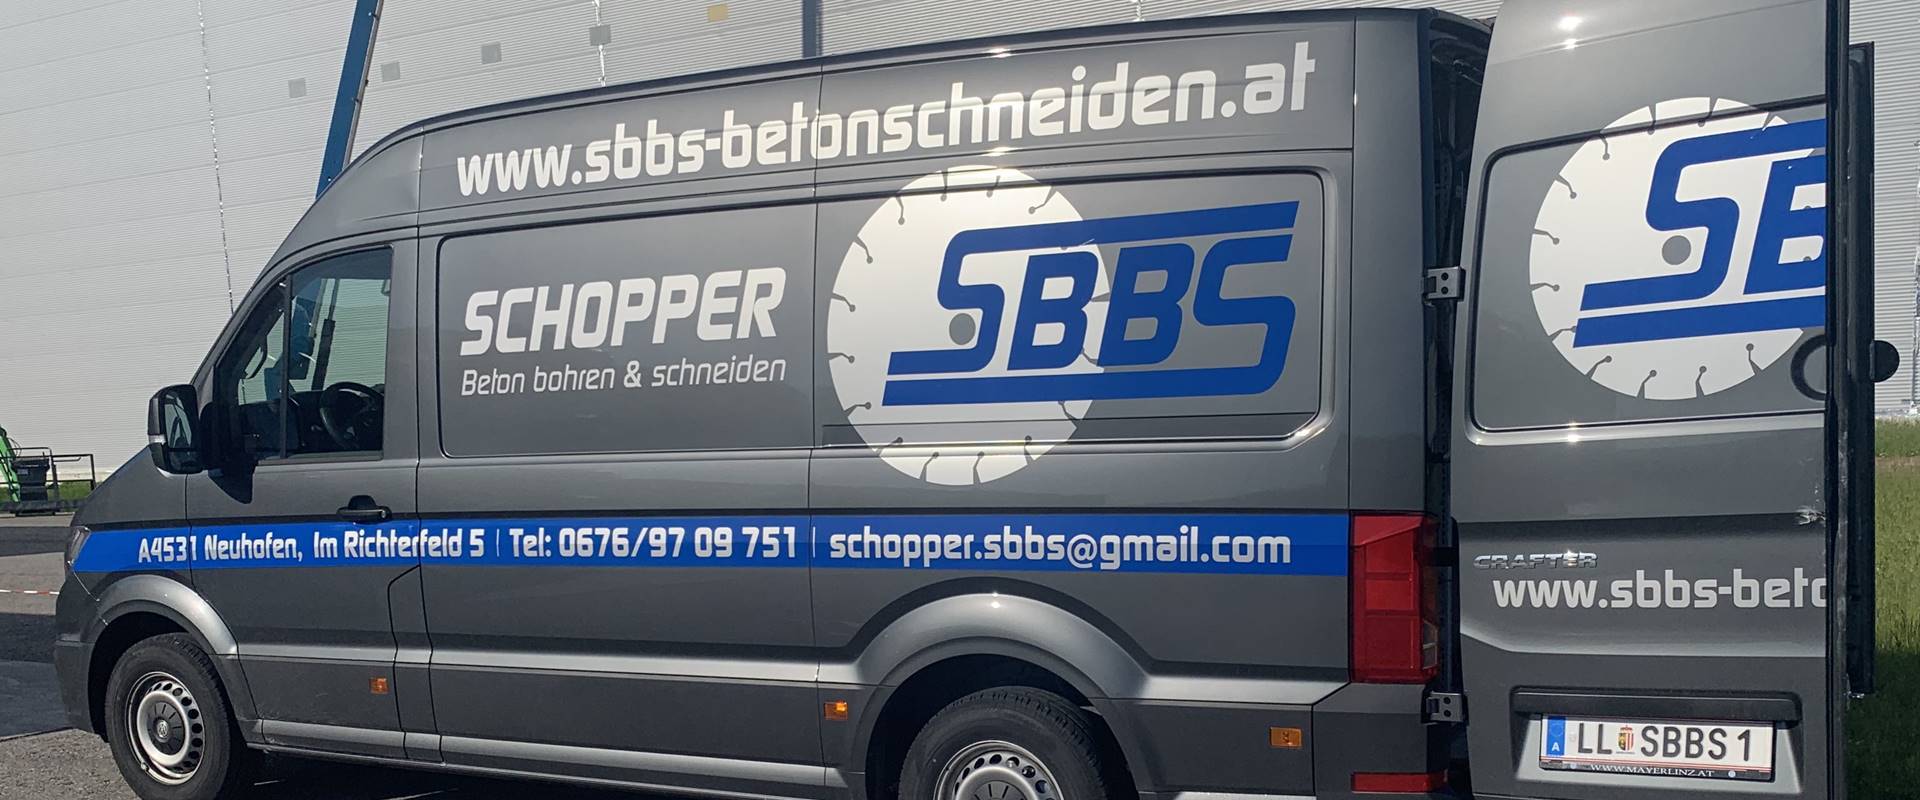 SBBS Schopper Beton bohren & schneiden e.U. 